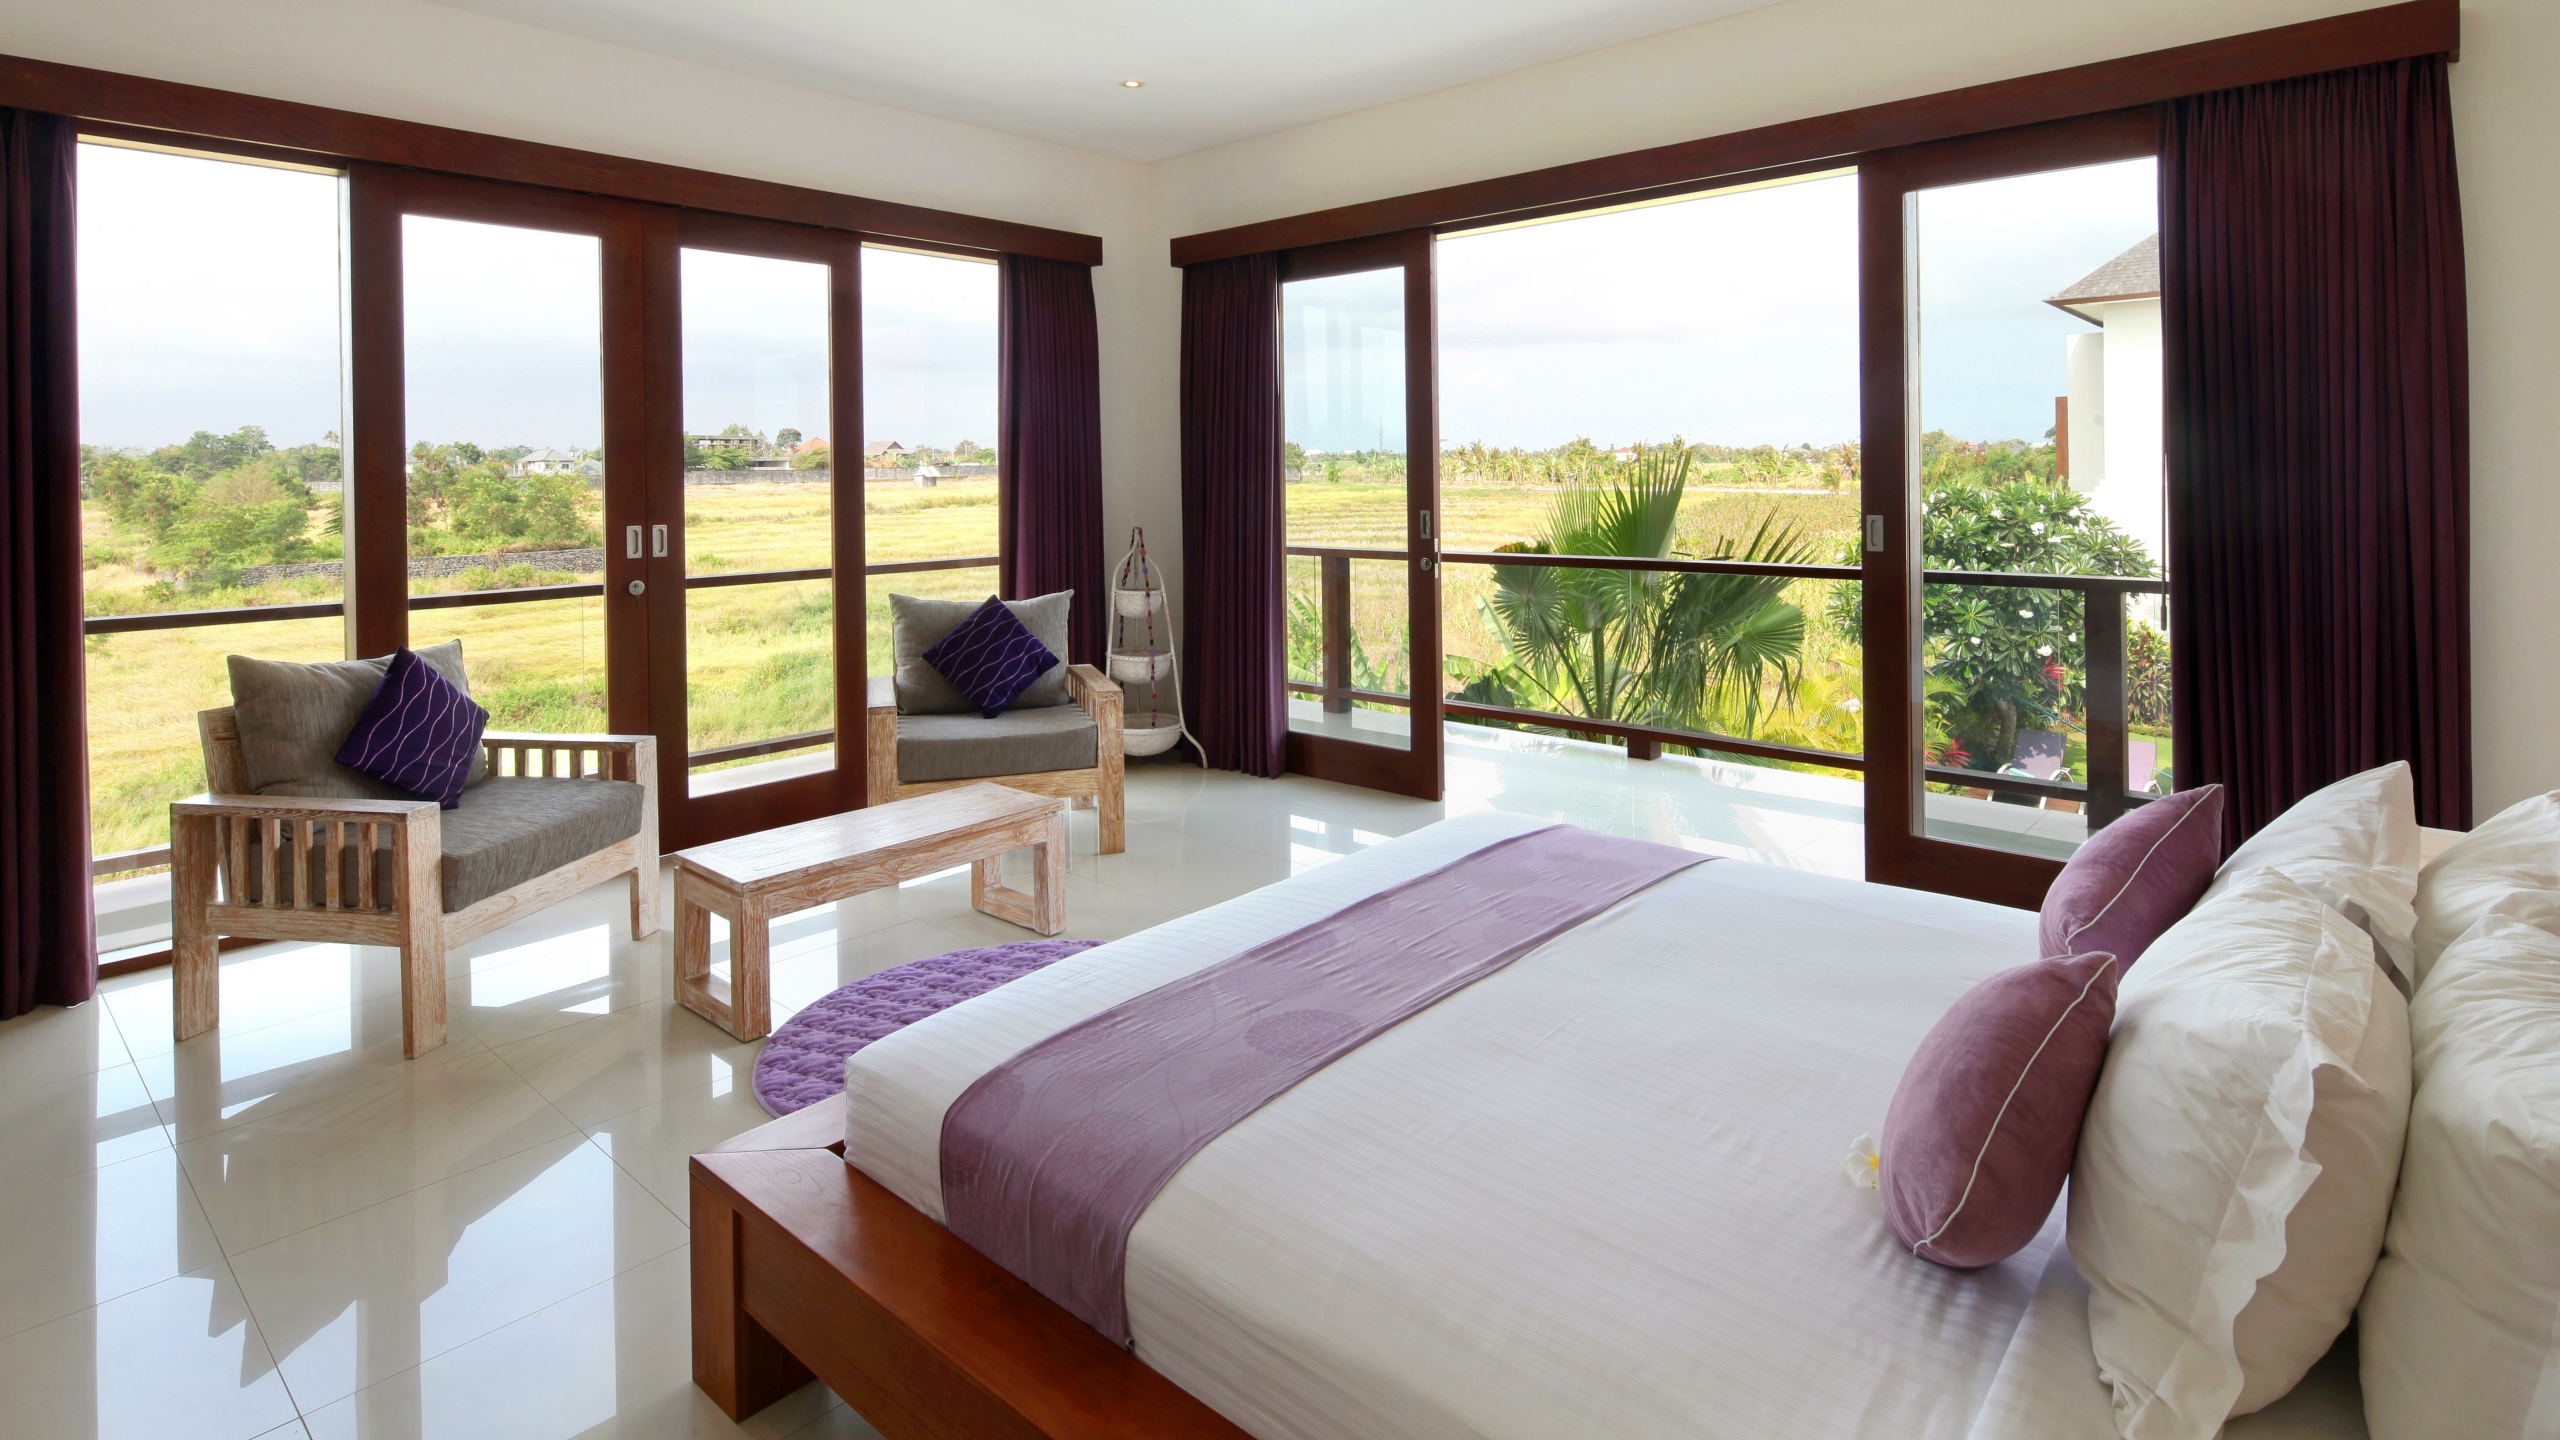 Bedroom with Seating Area - Villa Merayu - Canggu, Bali